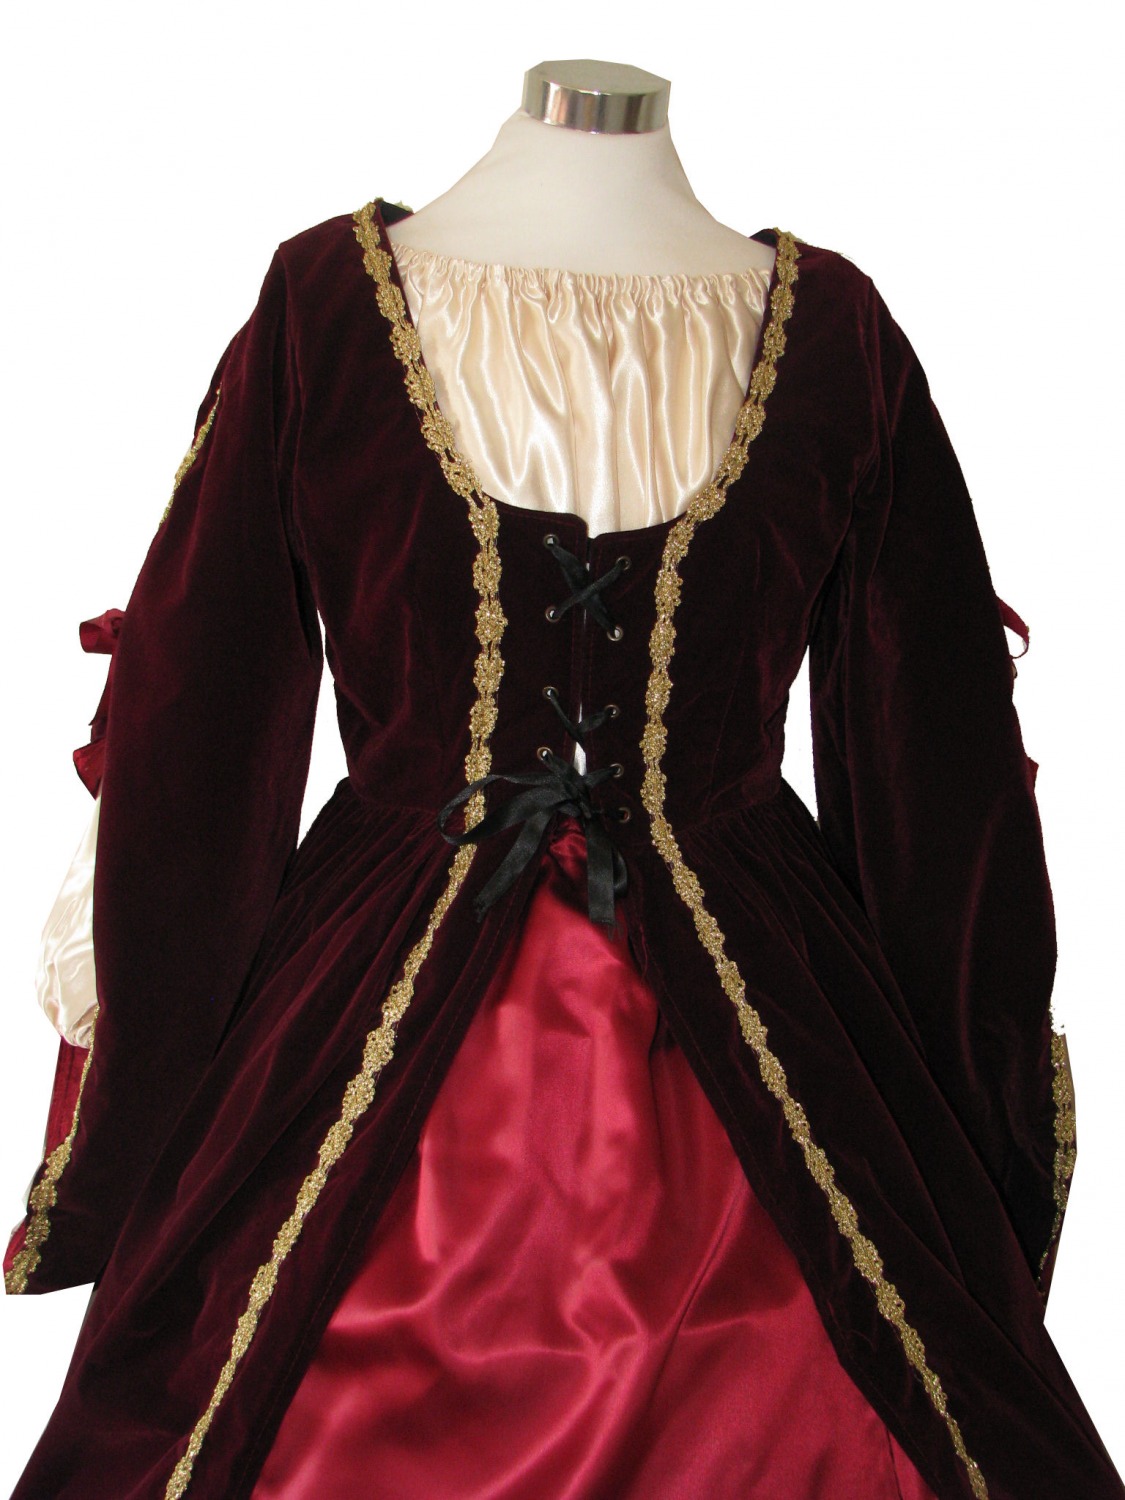 Ladies Medieval Tudor Costume And Headdress Size 14 - 18 Image